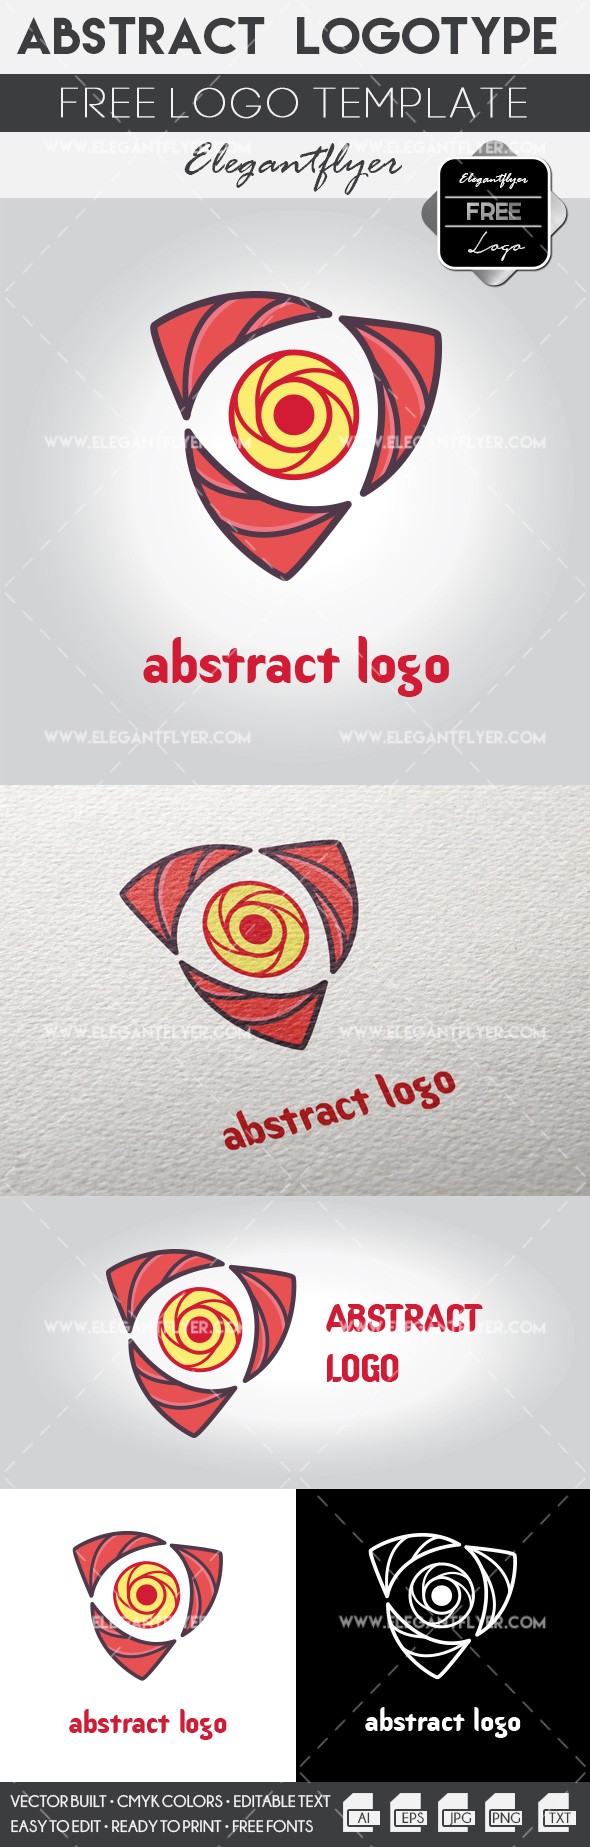 Abstract logo by ElegantFlyer